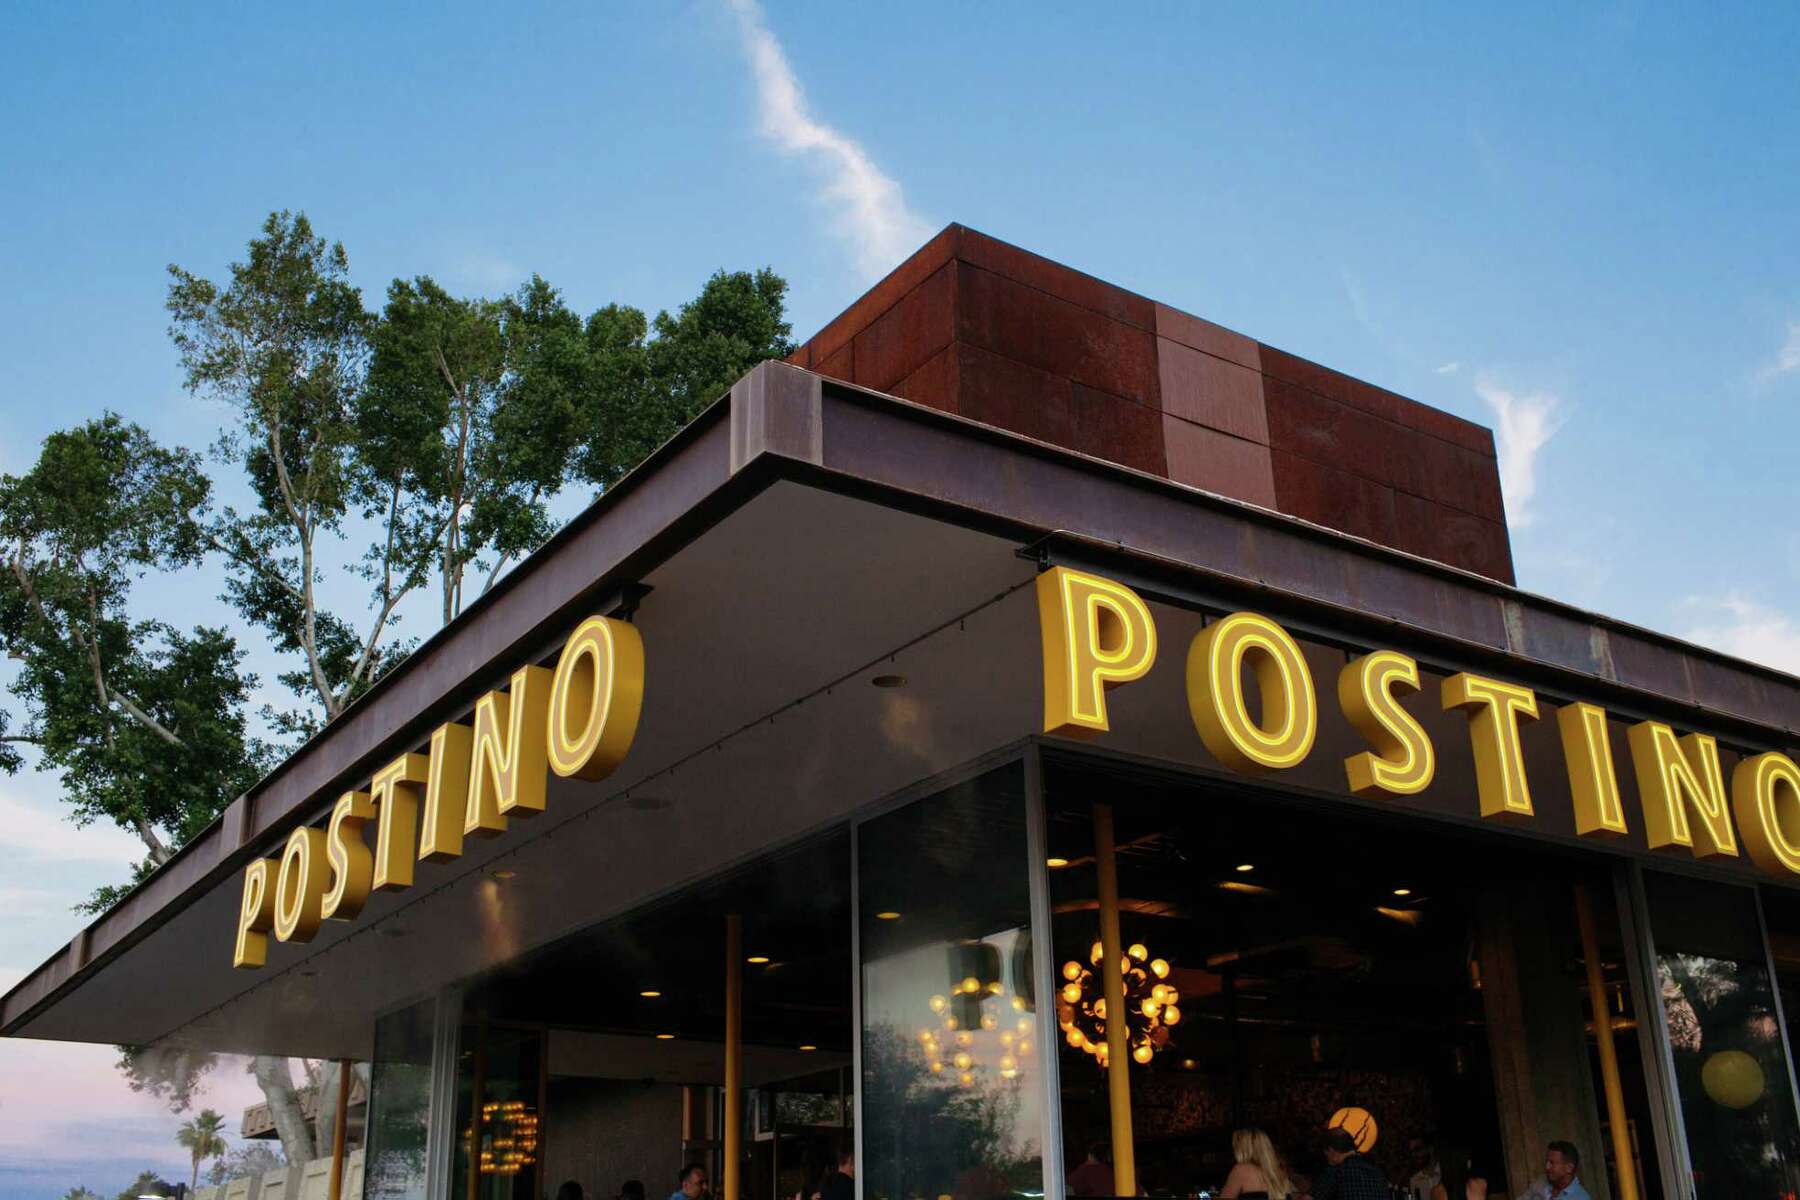 Postino Wine Café, 85°C Bakery Café: San Antonio's biggest food stories of  the week, Flavor, San Antonio